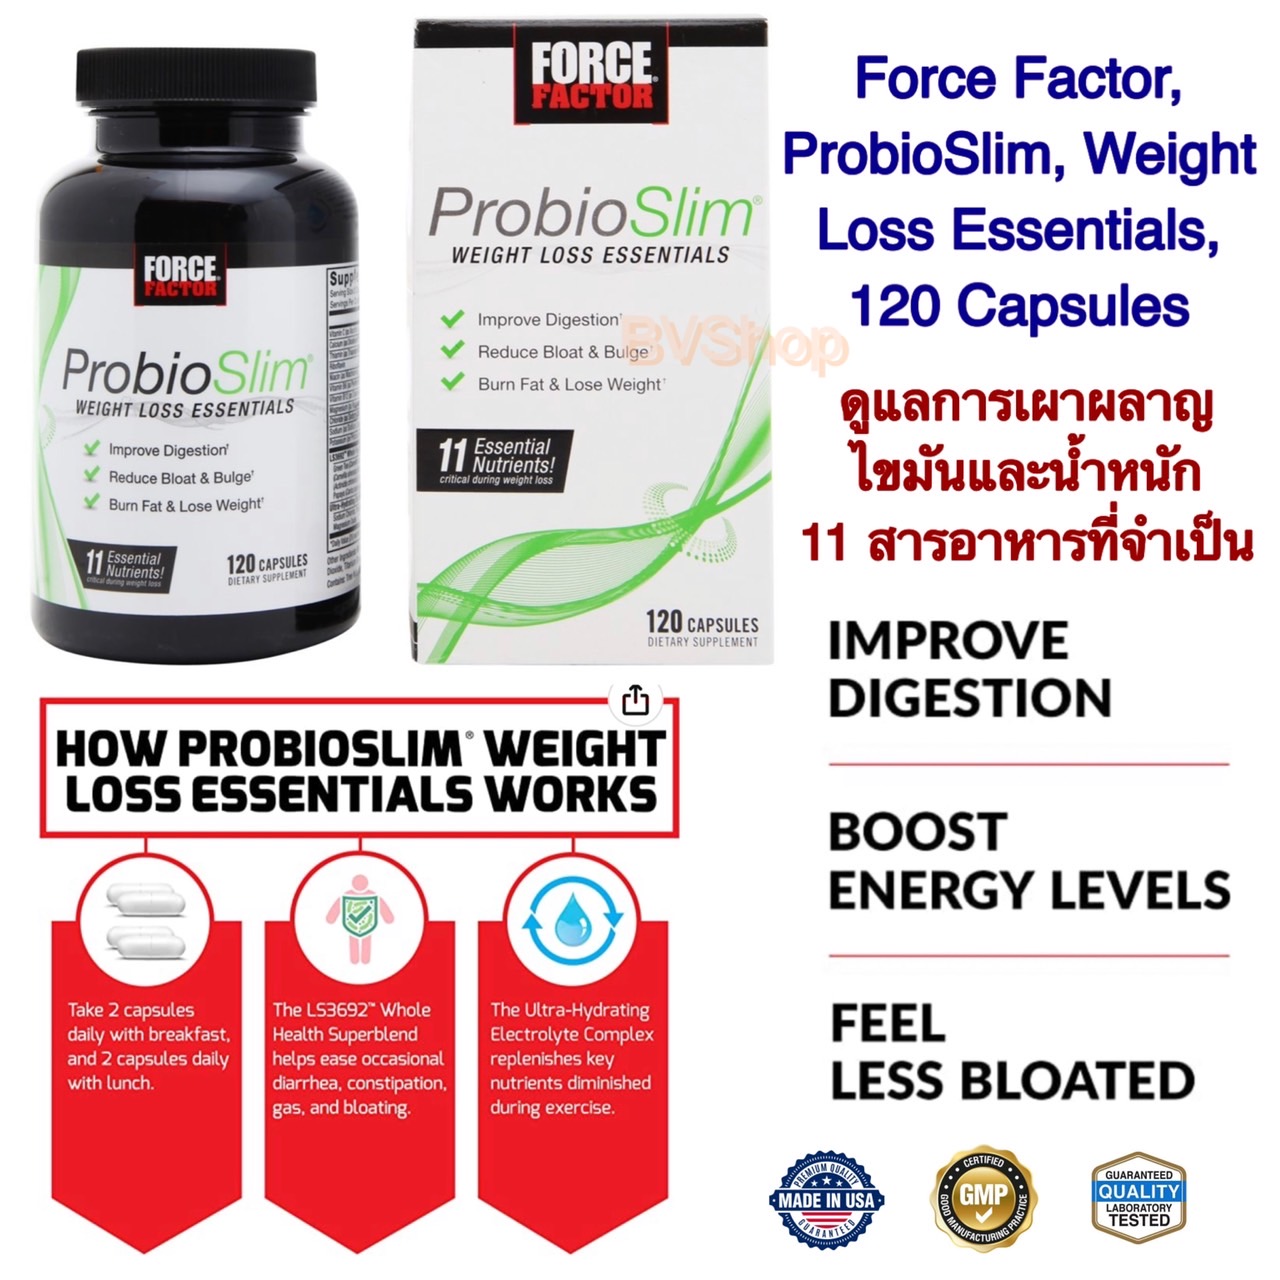 ProbioSlim Weight Loss Essentials - Force Factor